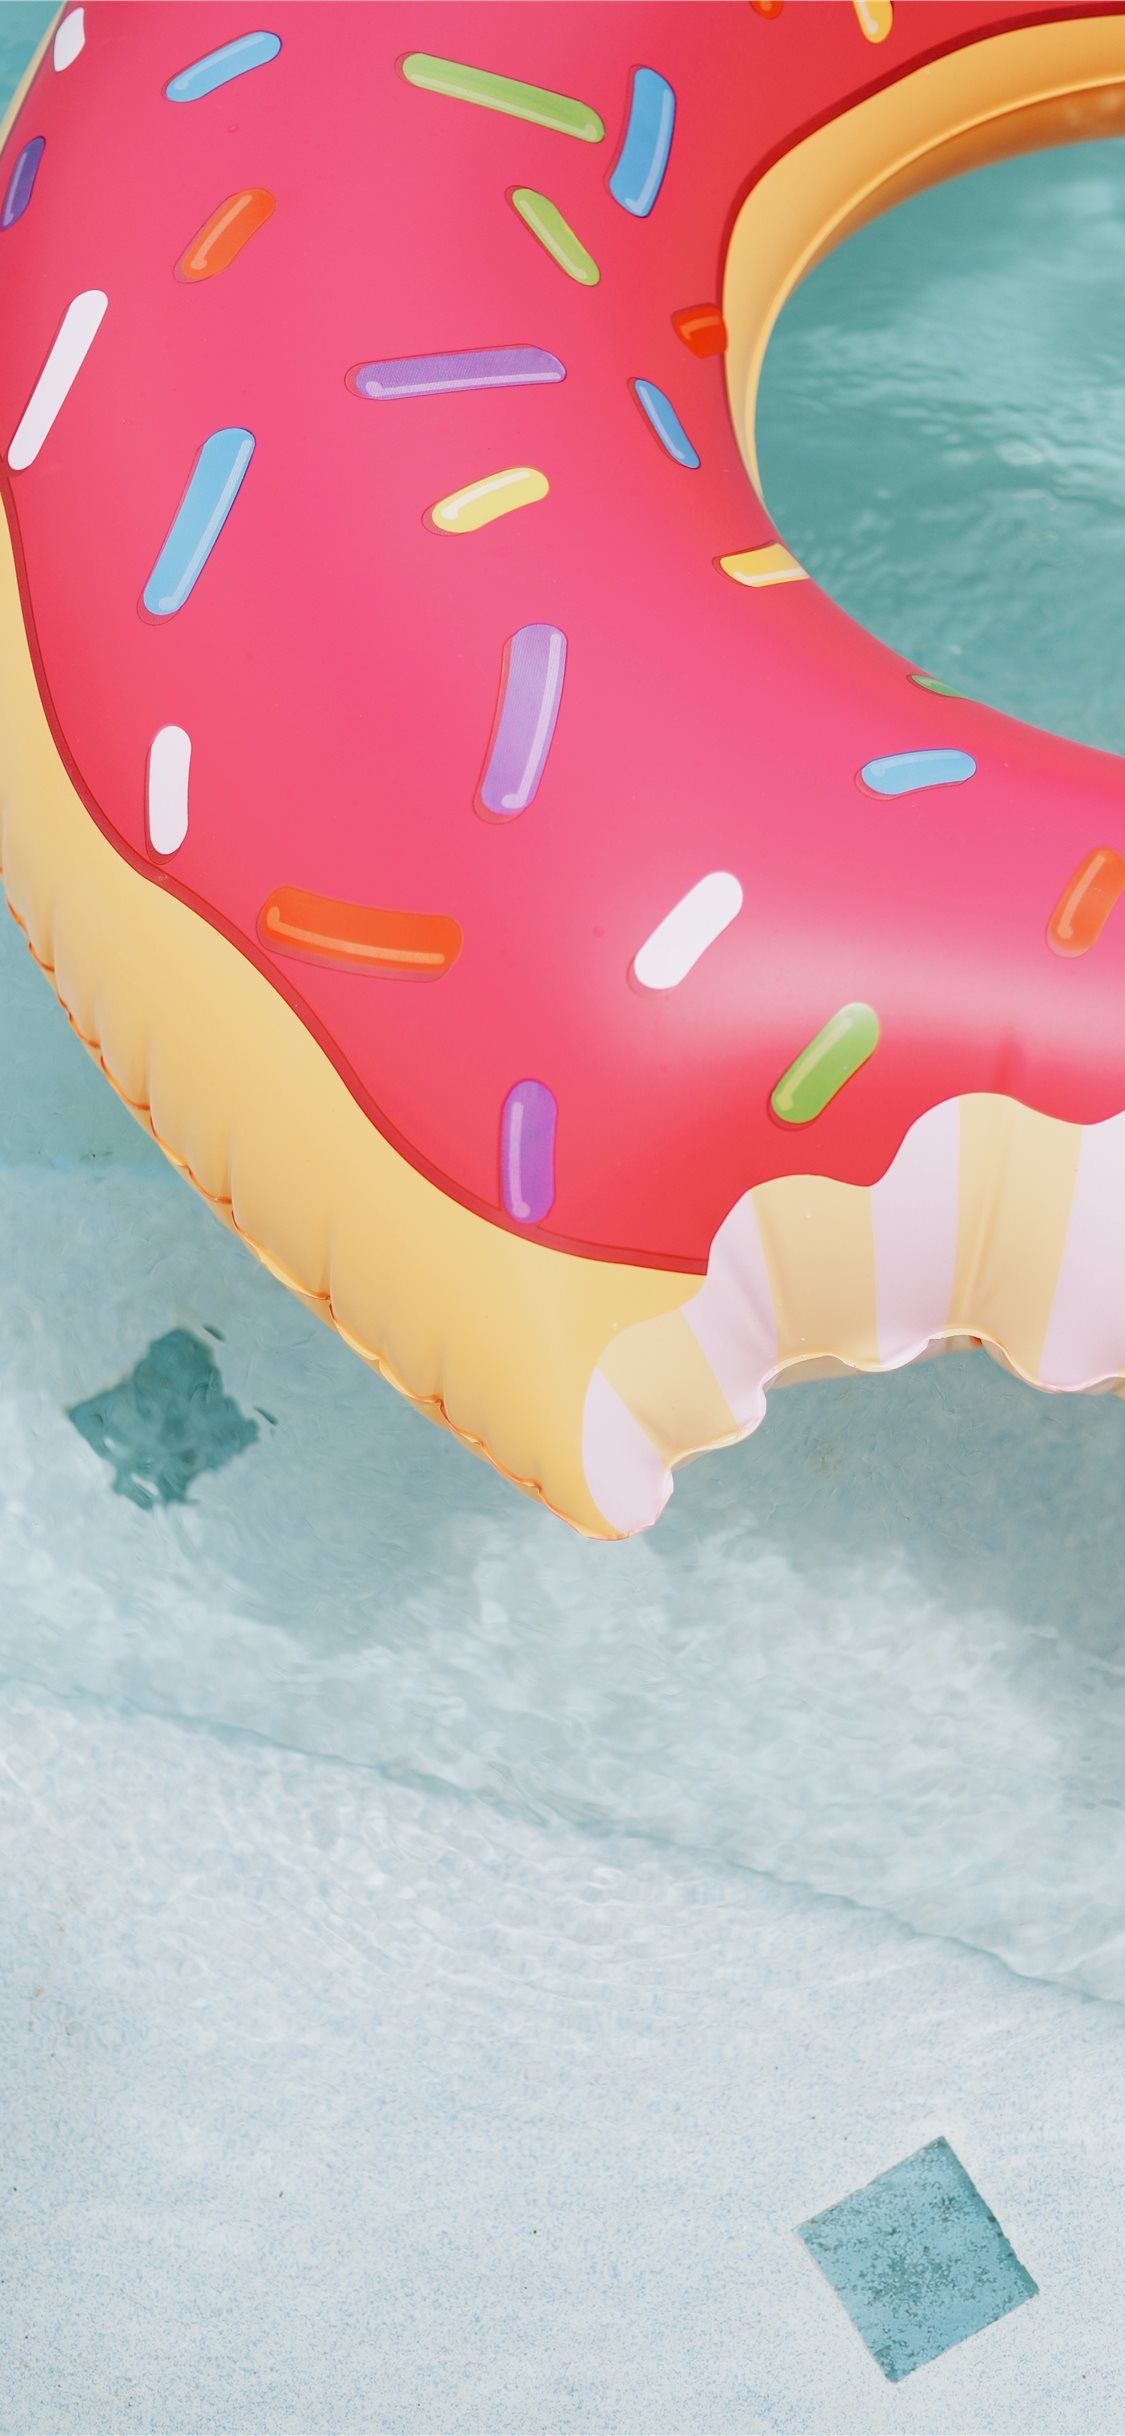 donut floatie in pool iPhone X Wallpaper Free Download